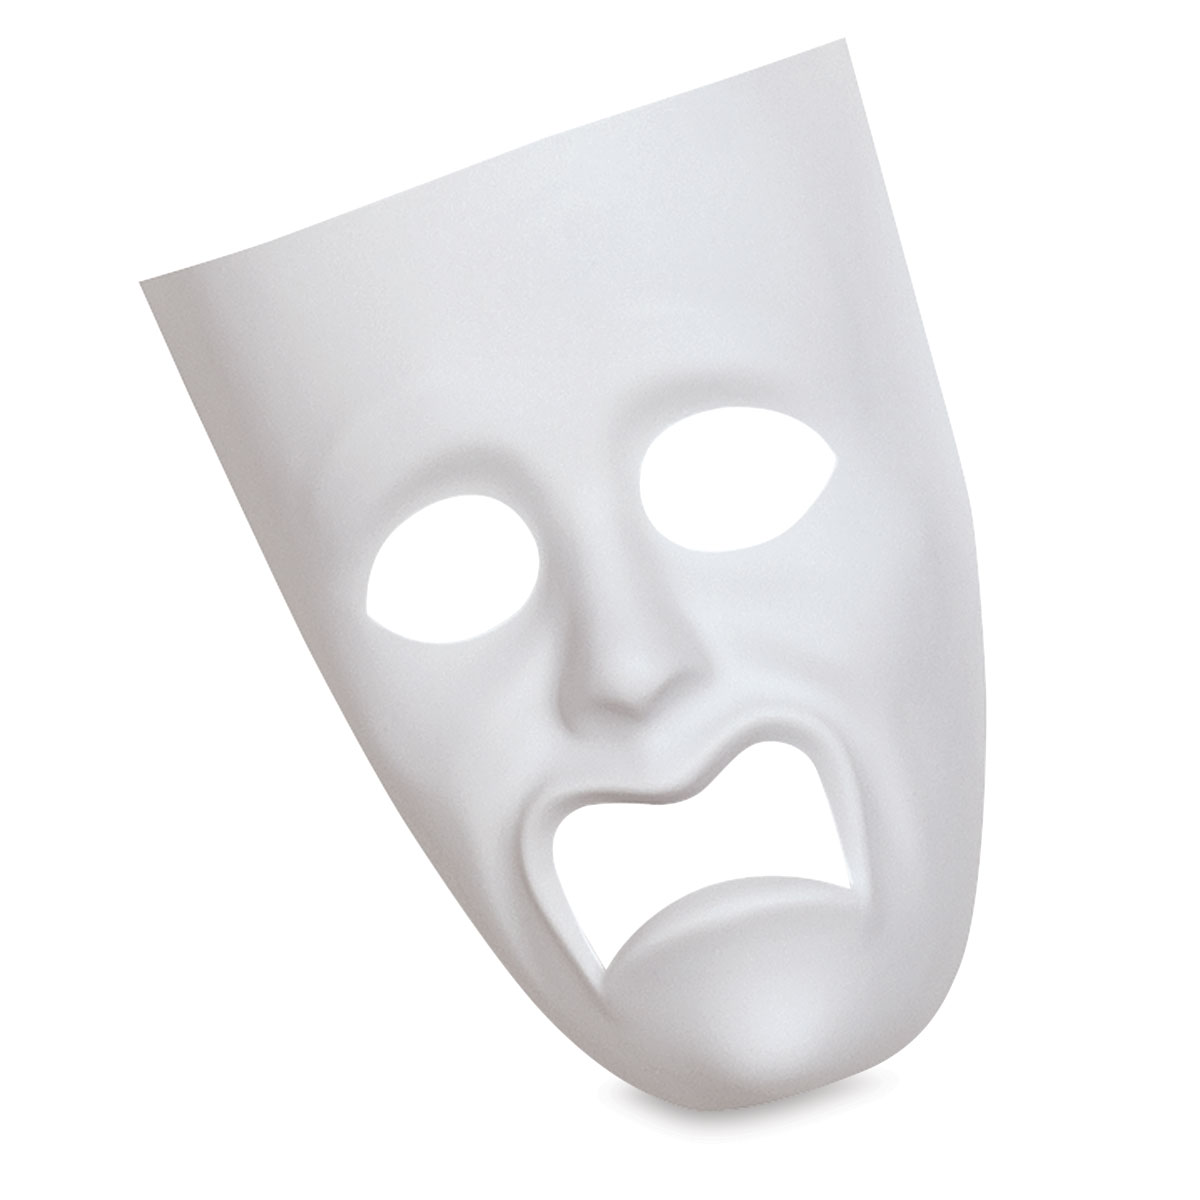 Plastic Mask Sad Face